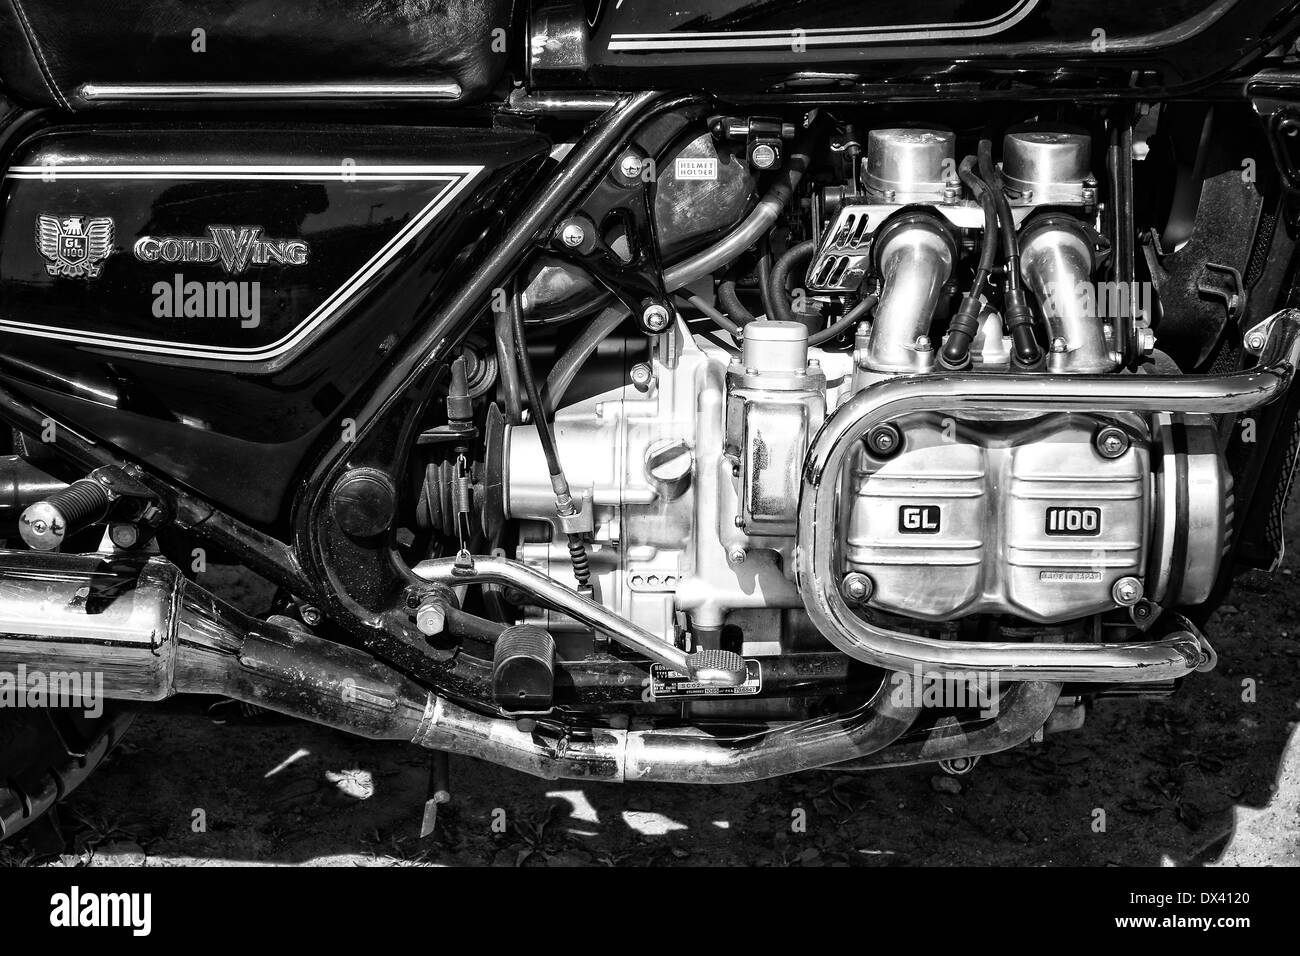 Motorcycle Engine Honda Gold Wing GL1100, black and white Stock Photo